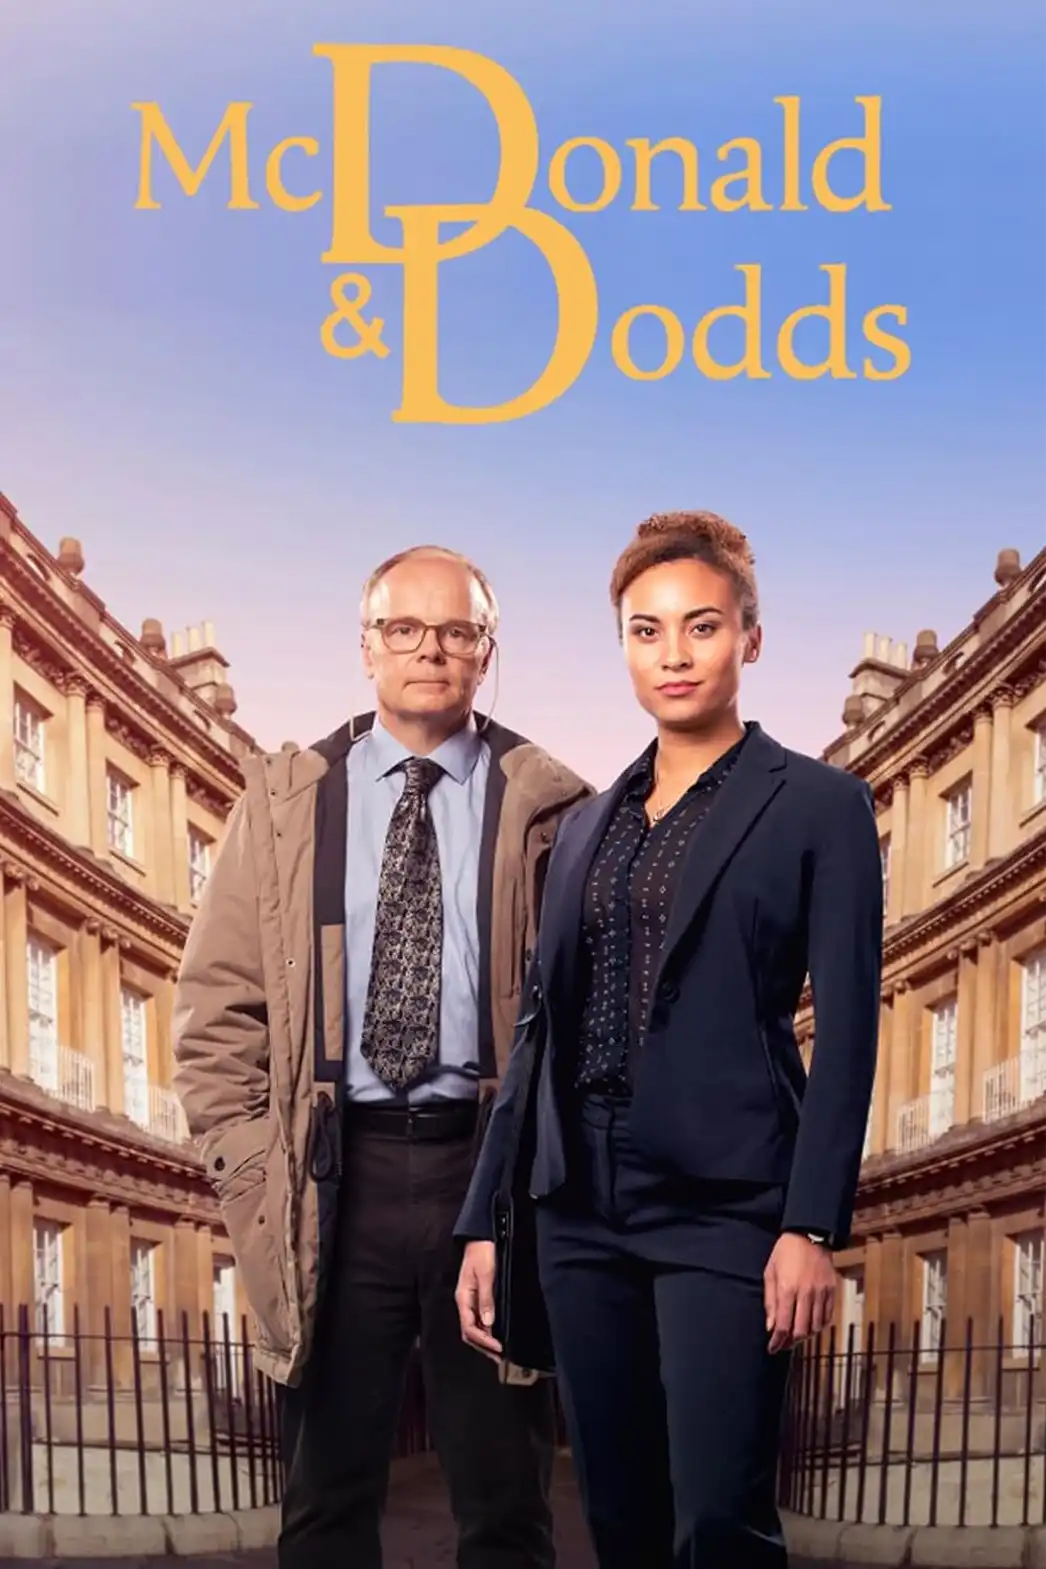 McDonald & Dodds Season 4 Soundtrack